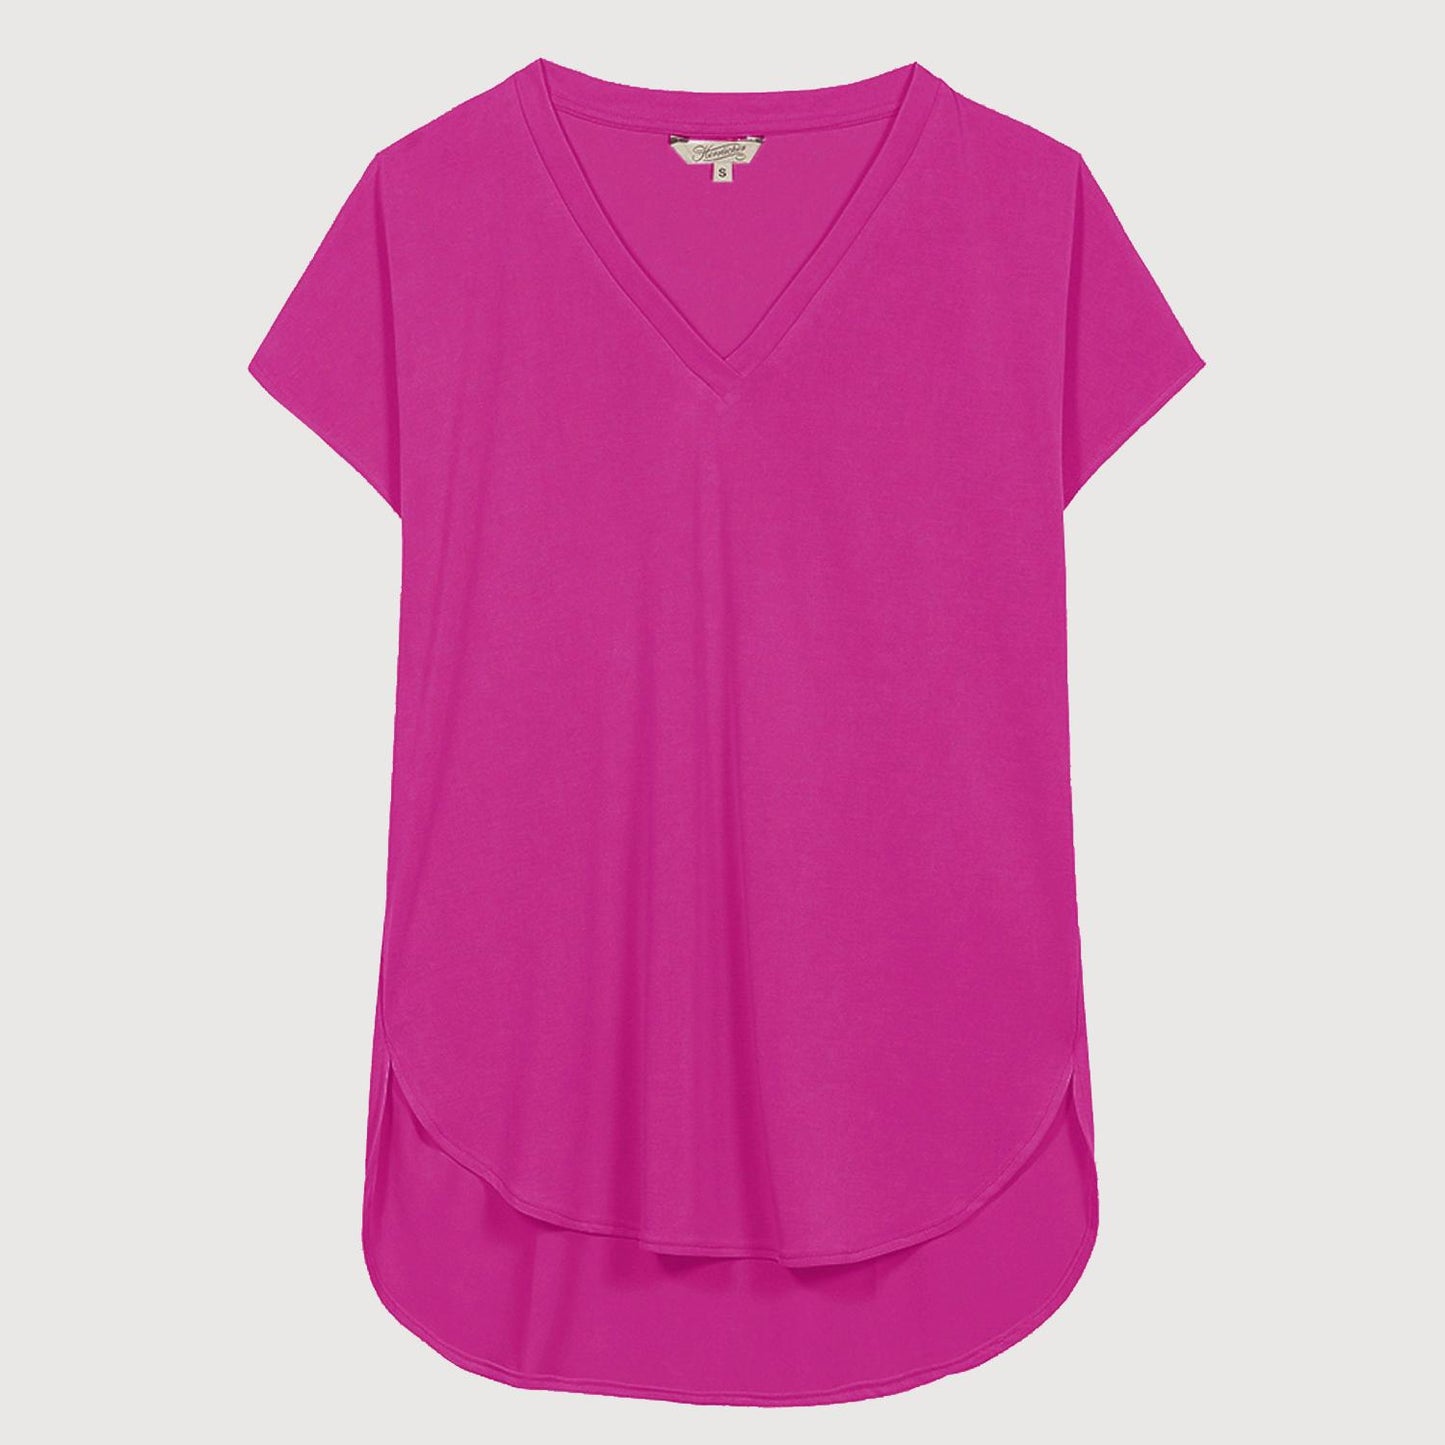 Herrlicher Damen Shirt Lilina Micromodal 1879 J9960 in 423 deep pink